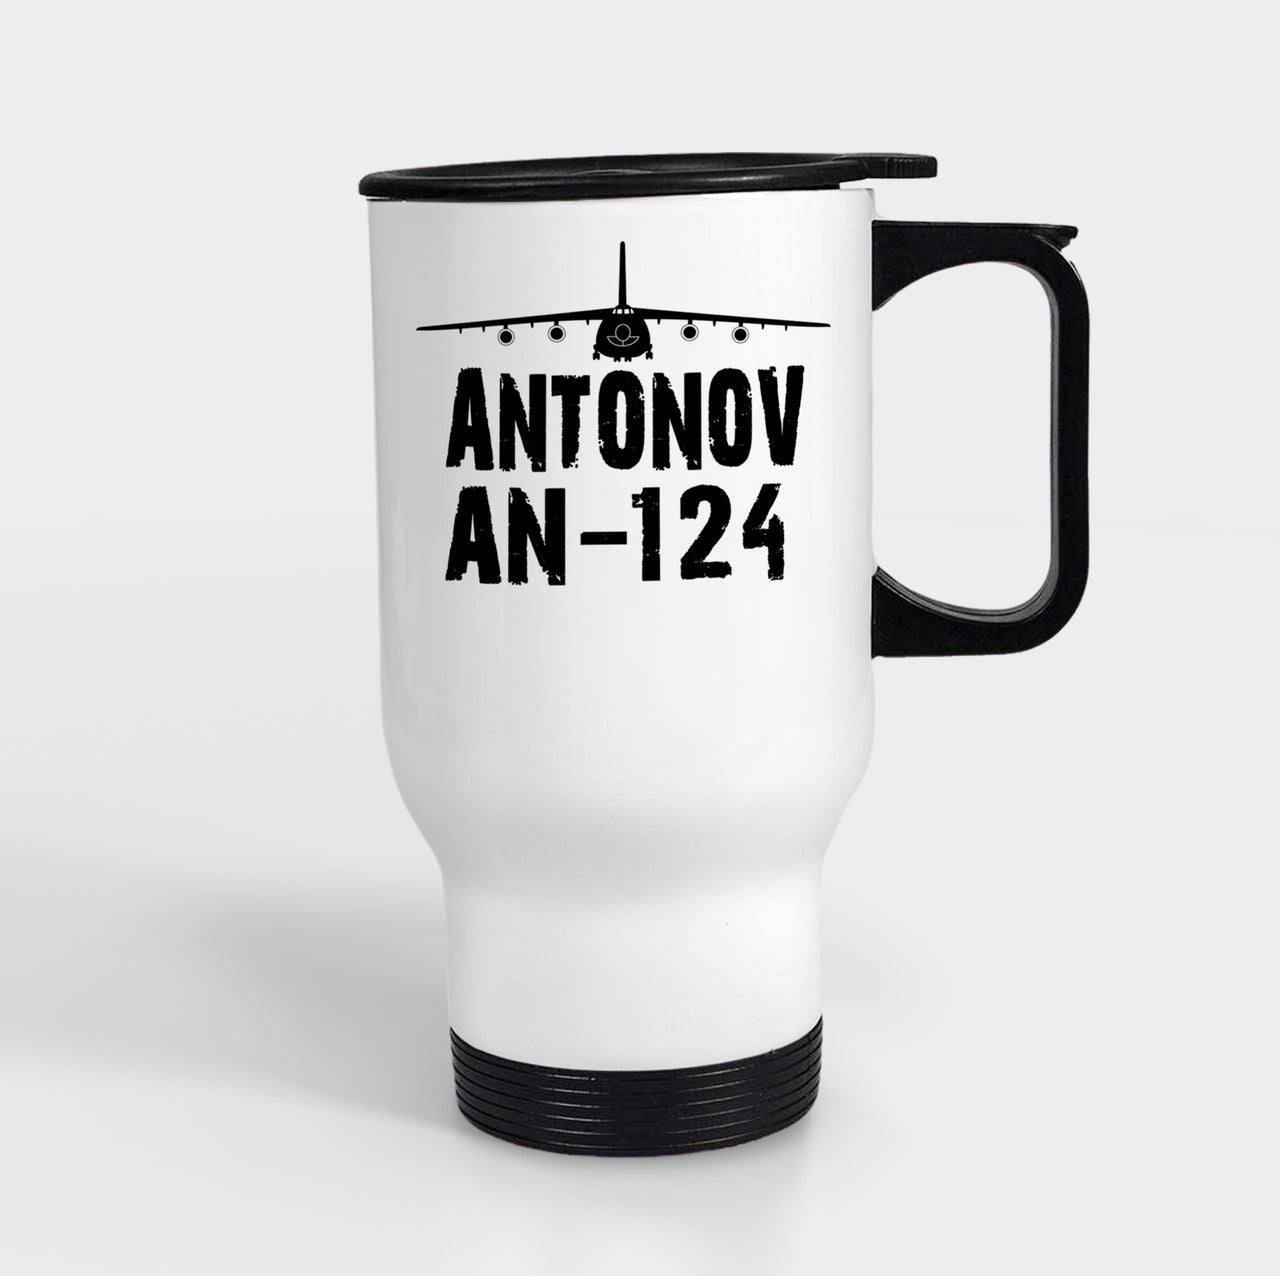 Antonov AN-124 & Plane Designed Travel Mugs (With Holder)